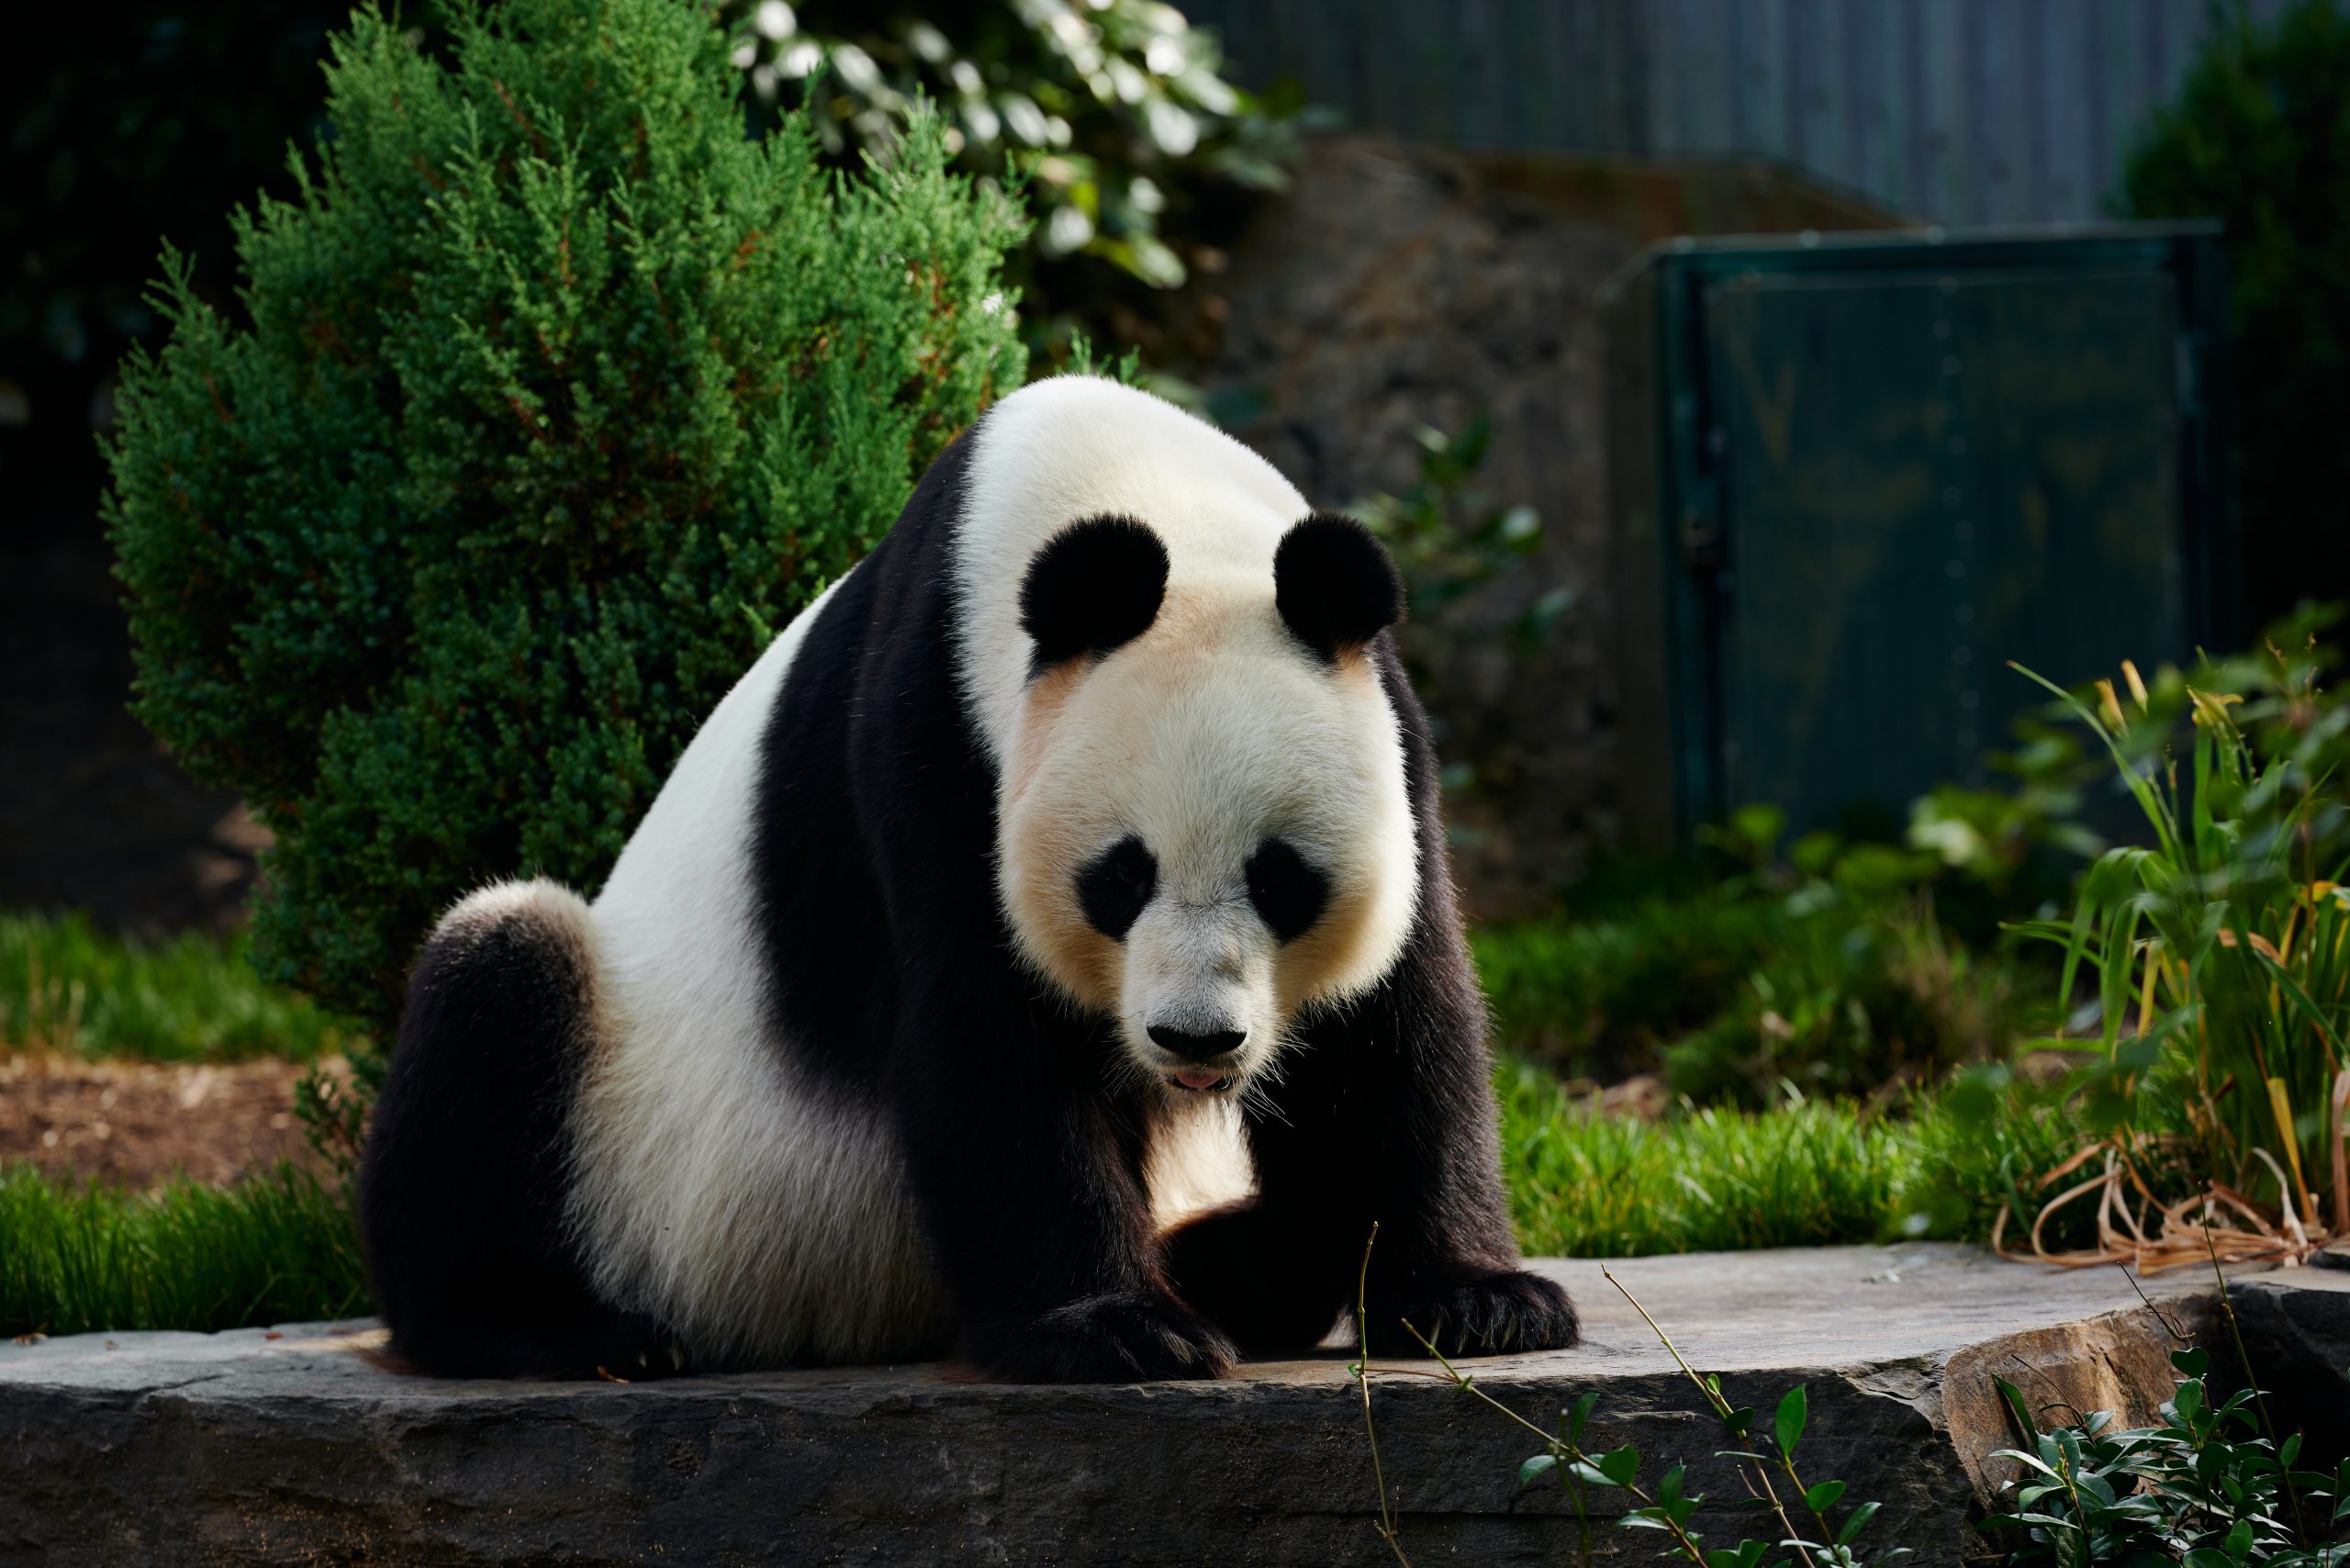 Panda at the Adelaide Zoo